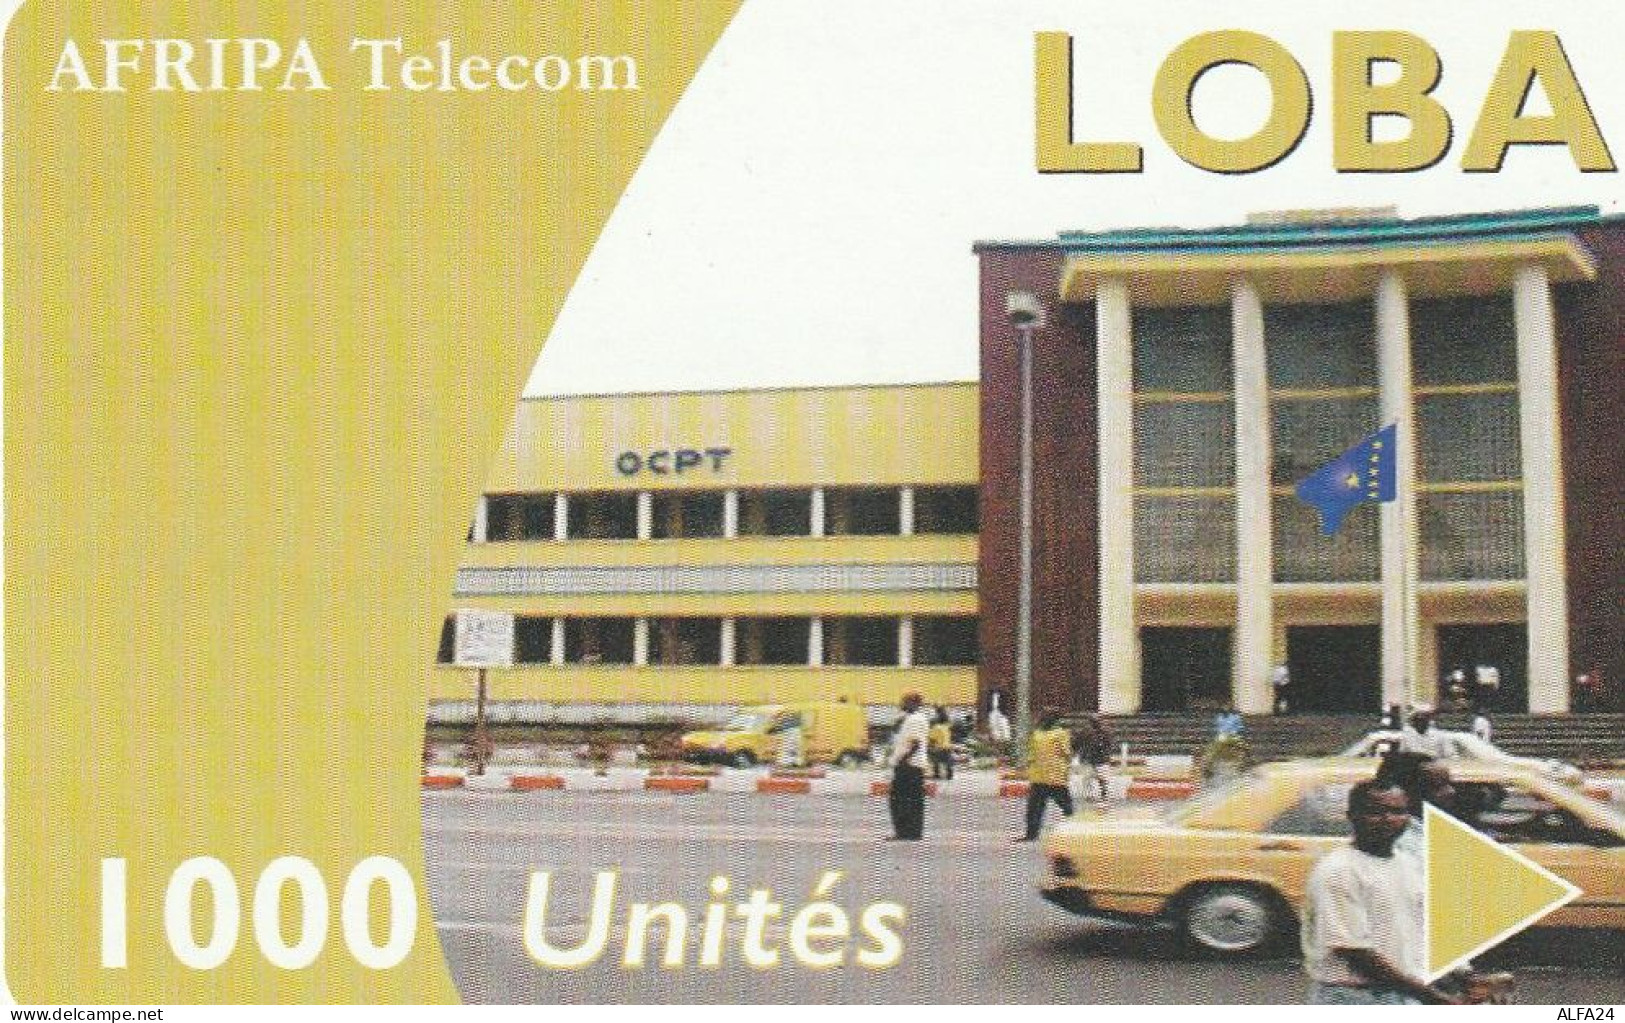 PREPAID PHONE CARD REP DEMOCATRICA CONGO  (CV3856 - Kongo